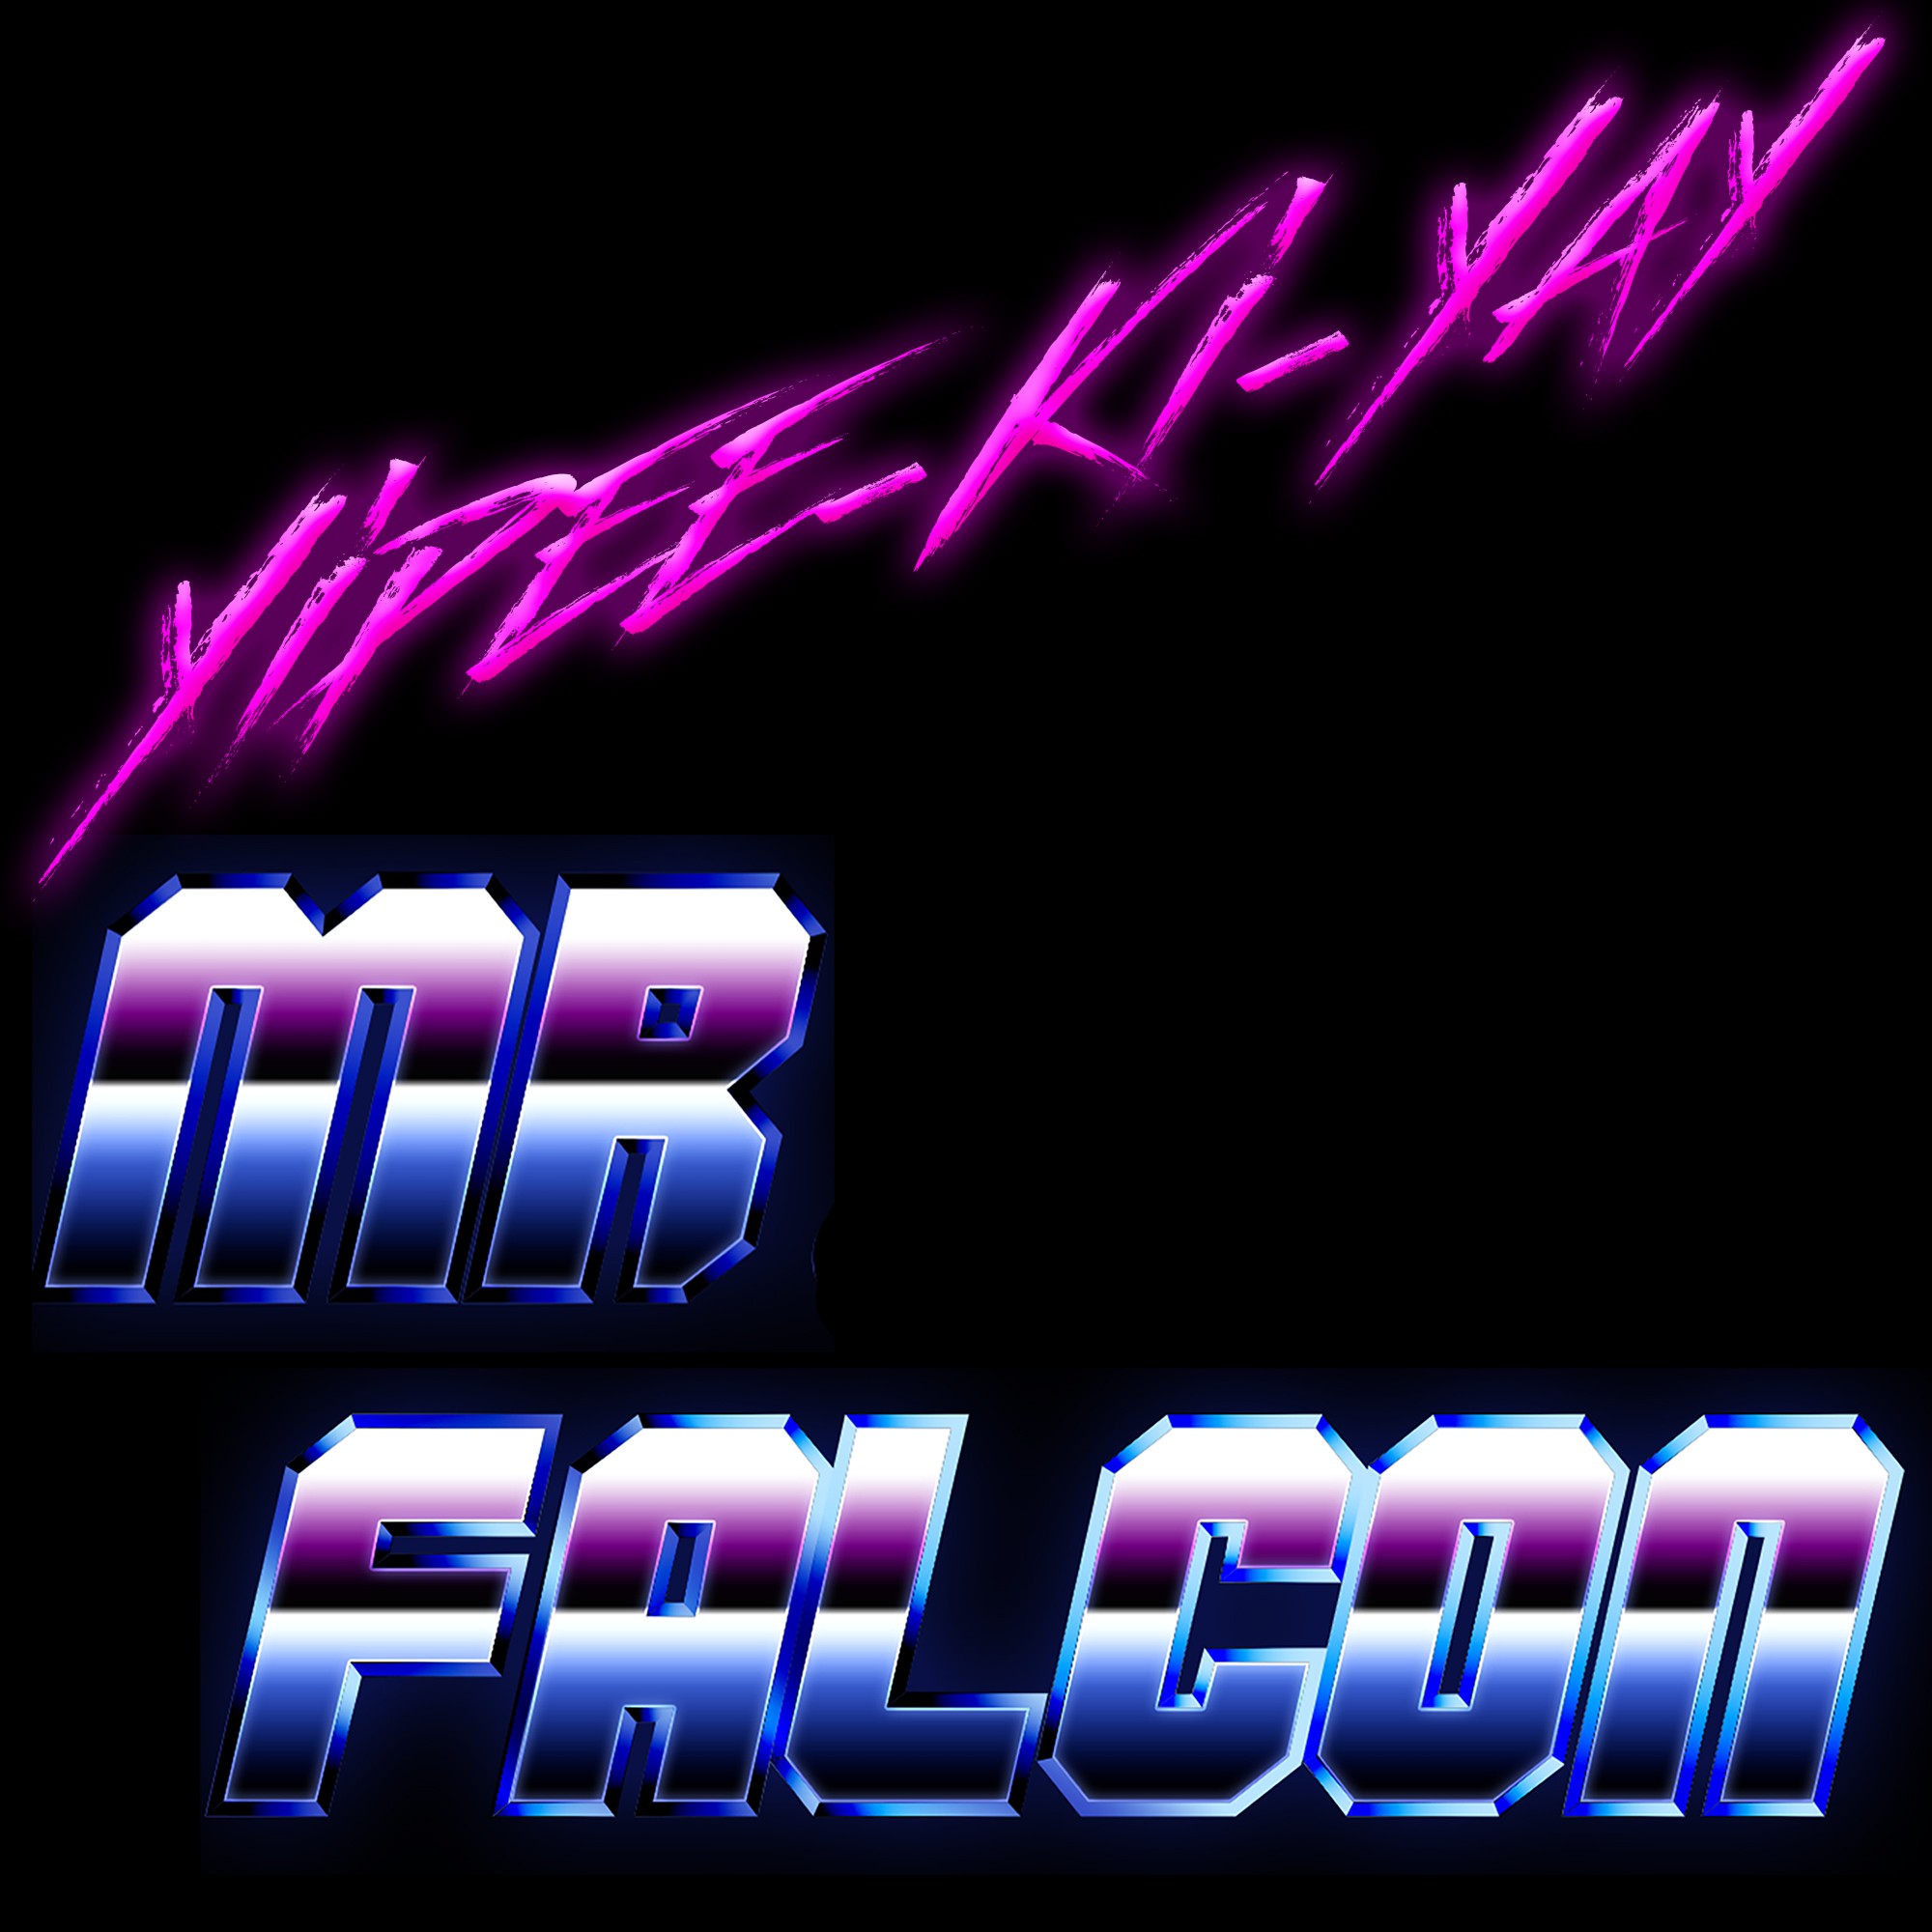 Yipee-Ki-Yay Mr Falcon